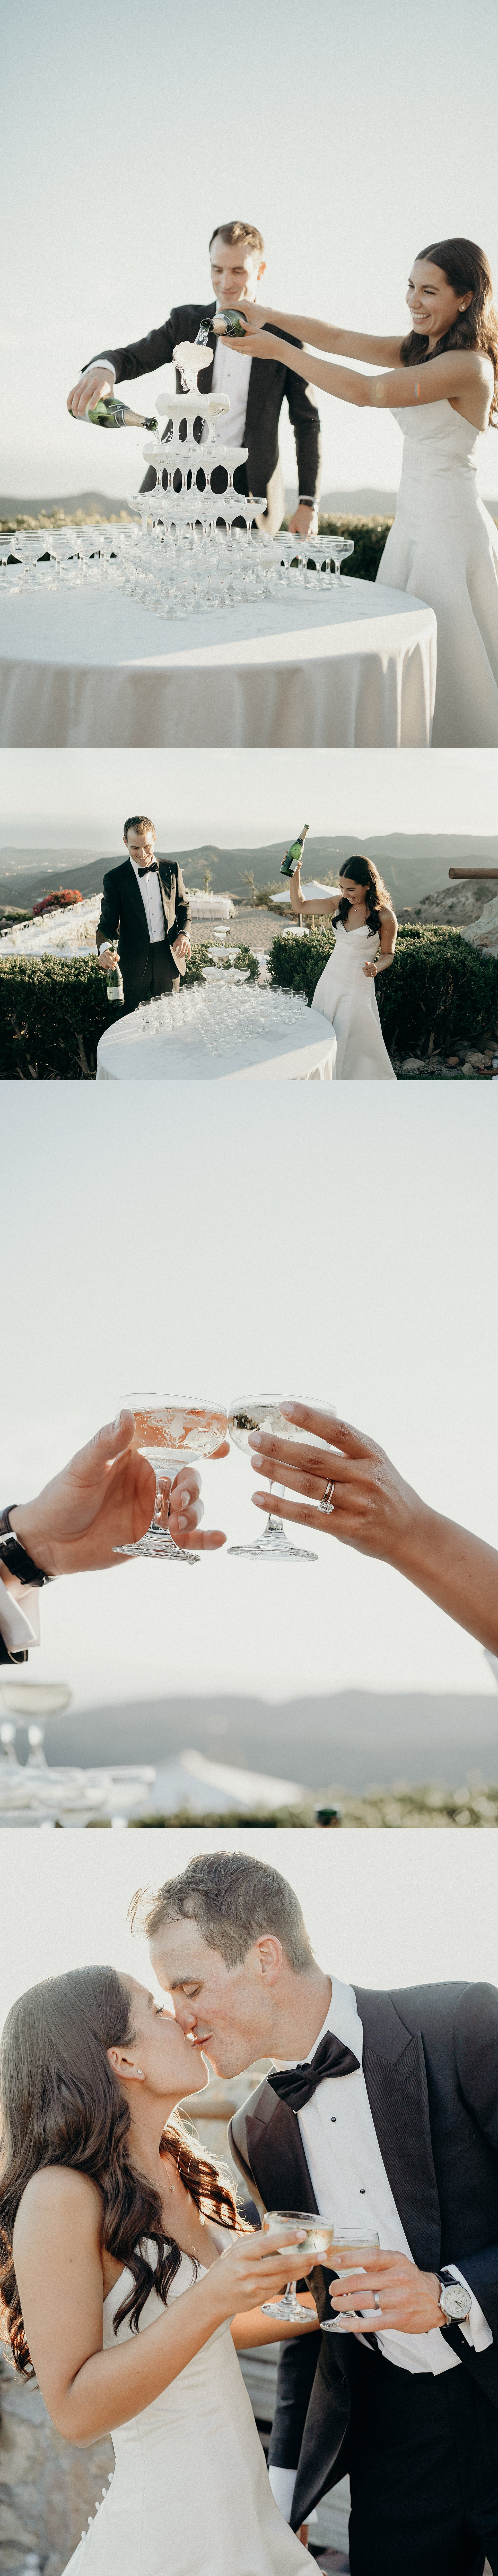 Top Wedding Photography in Malibu.jpg